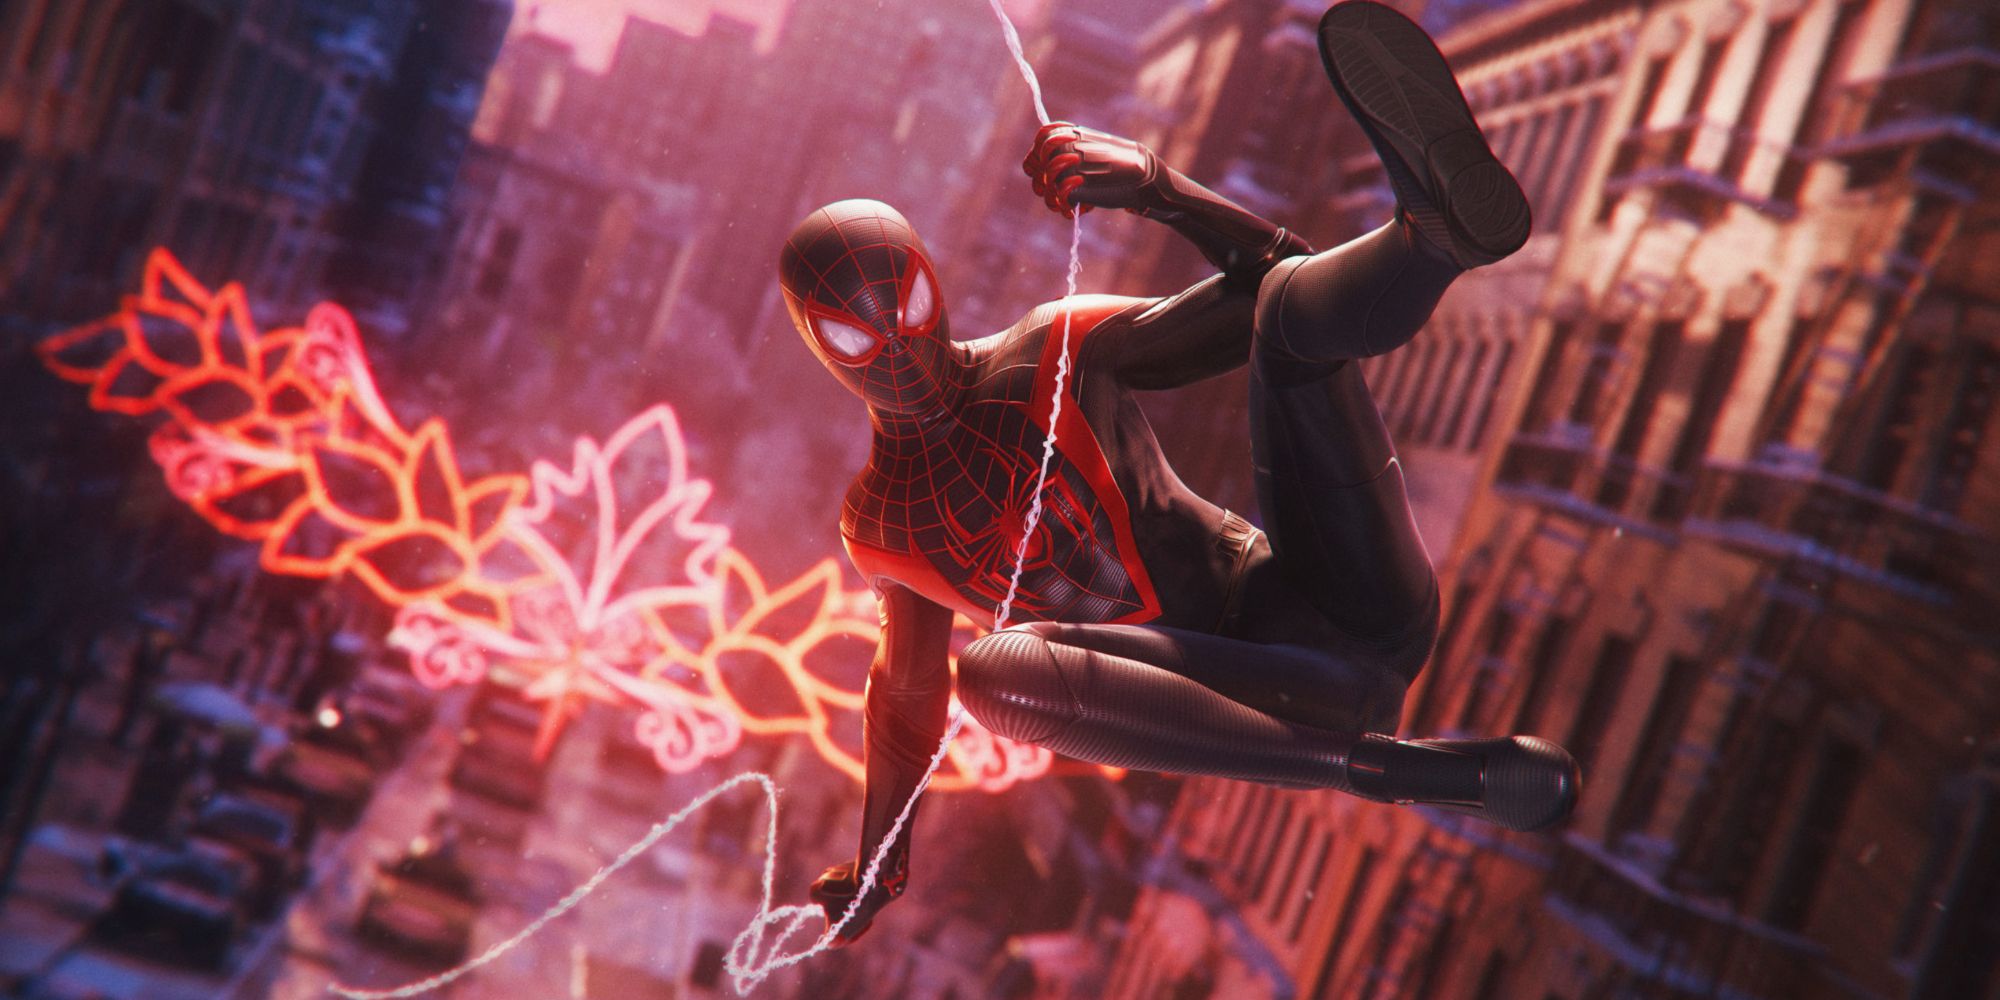 Miles in his Spider-Man suit swinging through the city